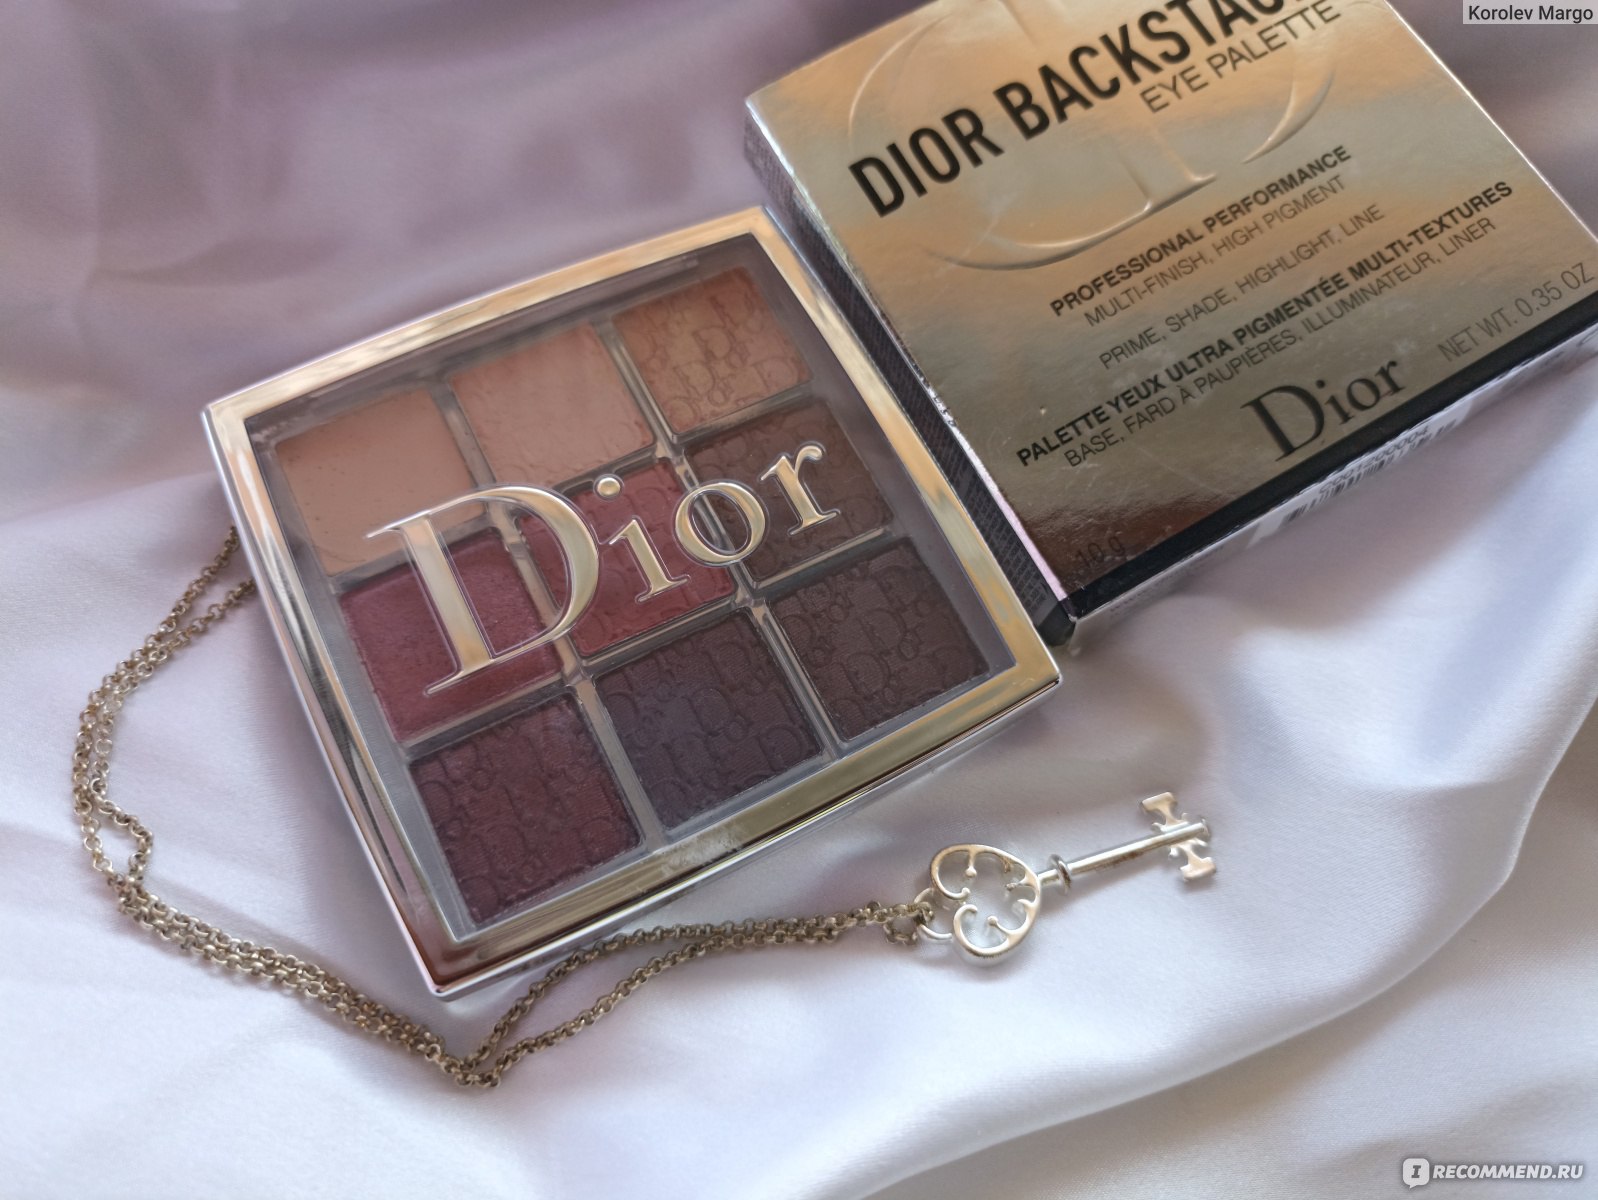 Палетка теней для век Backstage Eye Palette в оттенке 004 от бренда Dior.